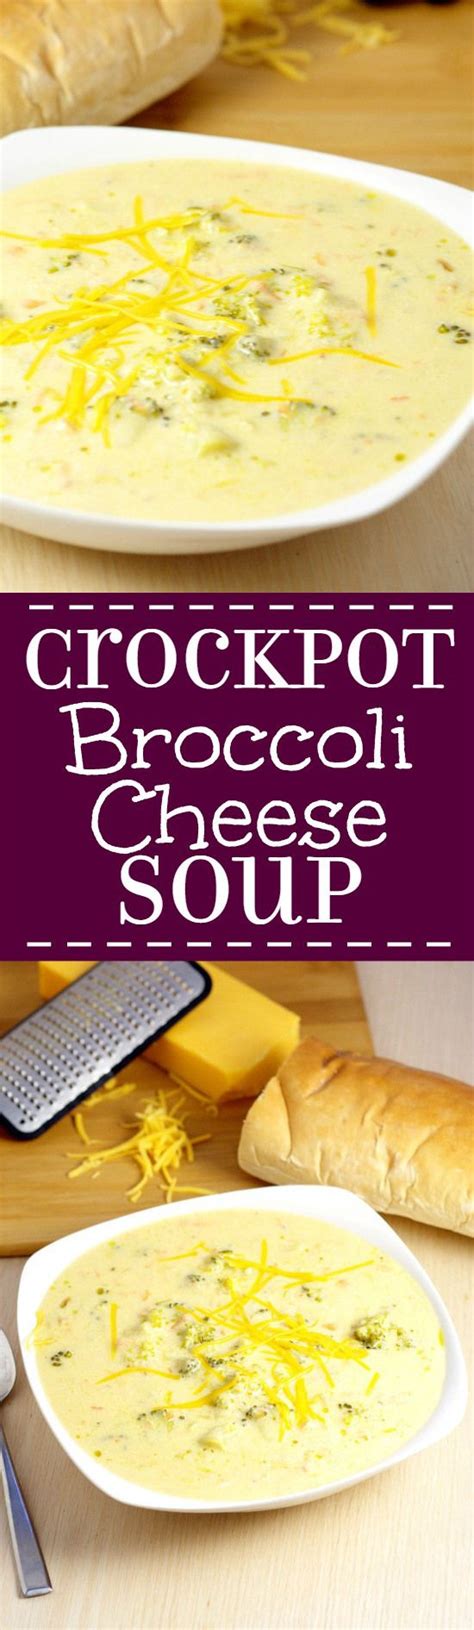 Crockpot Broccoli Cheese Soup | The Gracious Wife | Recipes, Cheese soup recipes, Cooking recipes